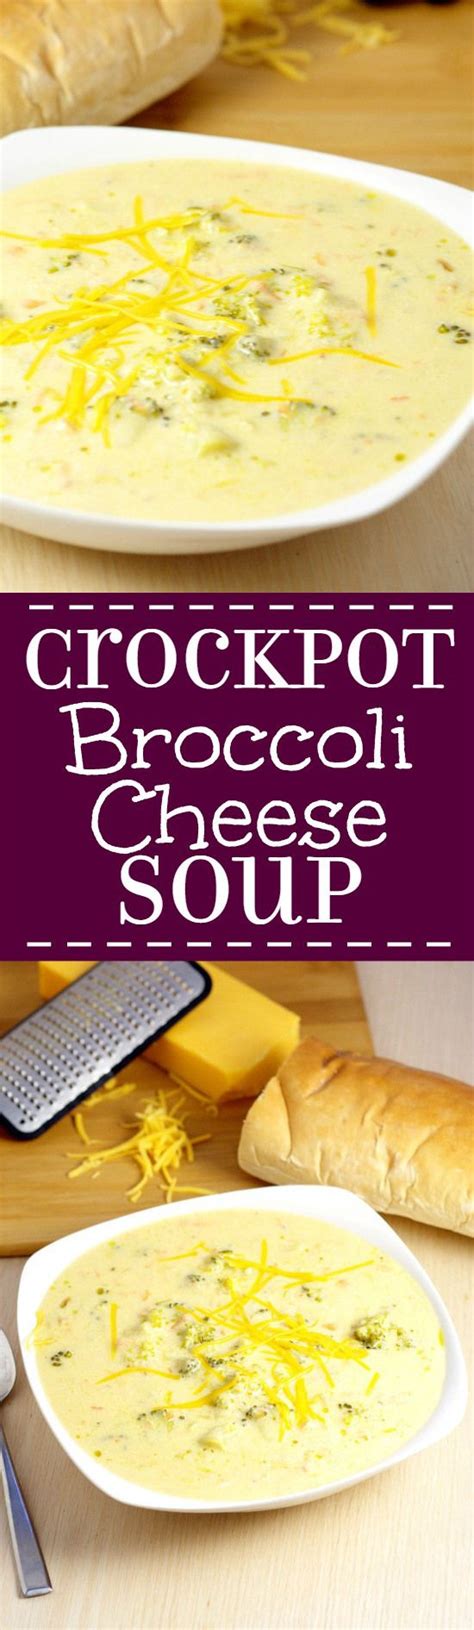 Crockpot Broccoli Cheese Soup | The Gracious Wife | Recipes, Cheese soup recipes, Cooking recipes